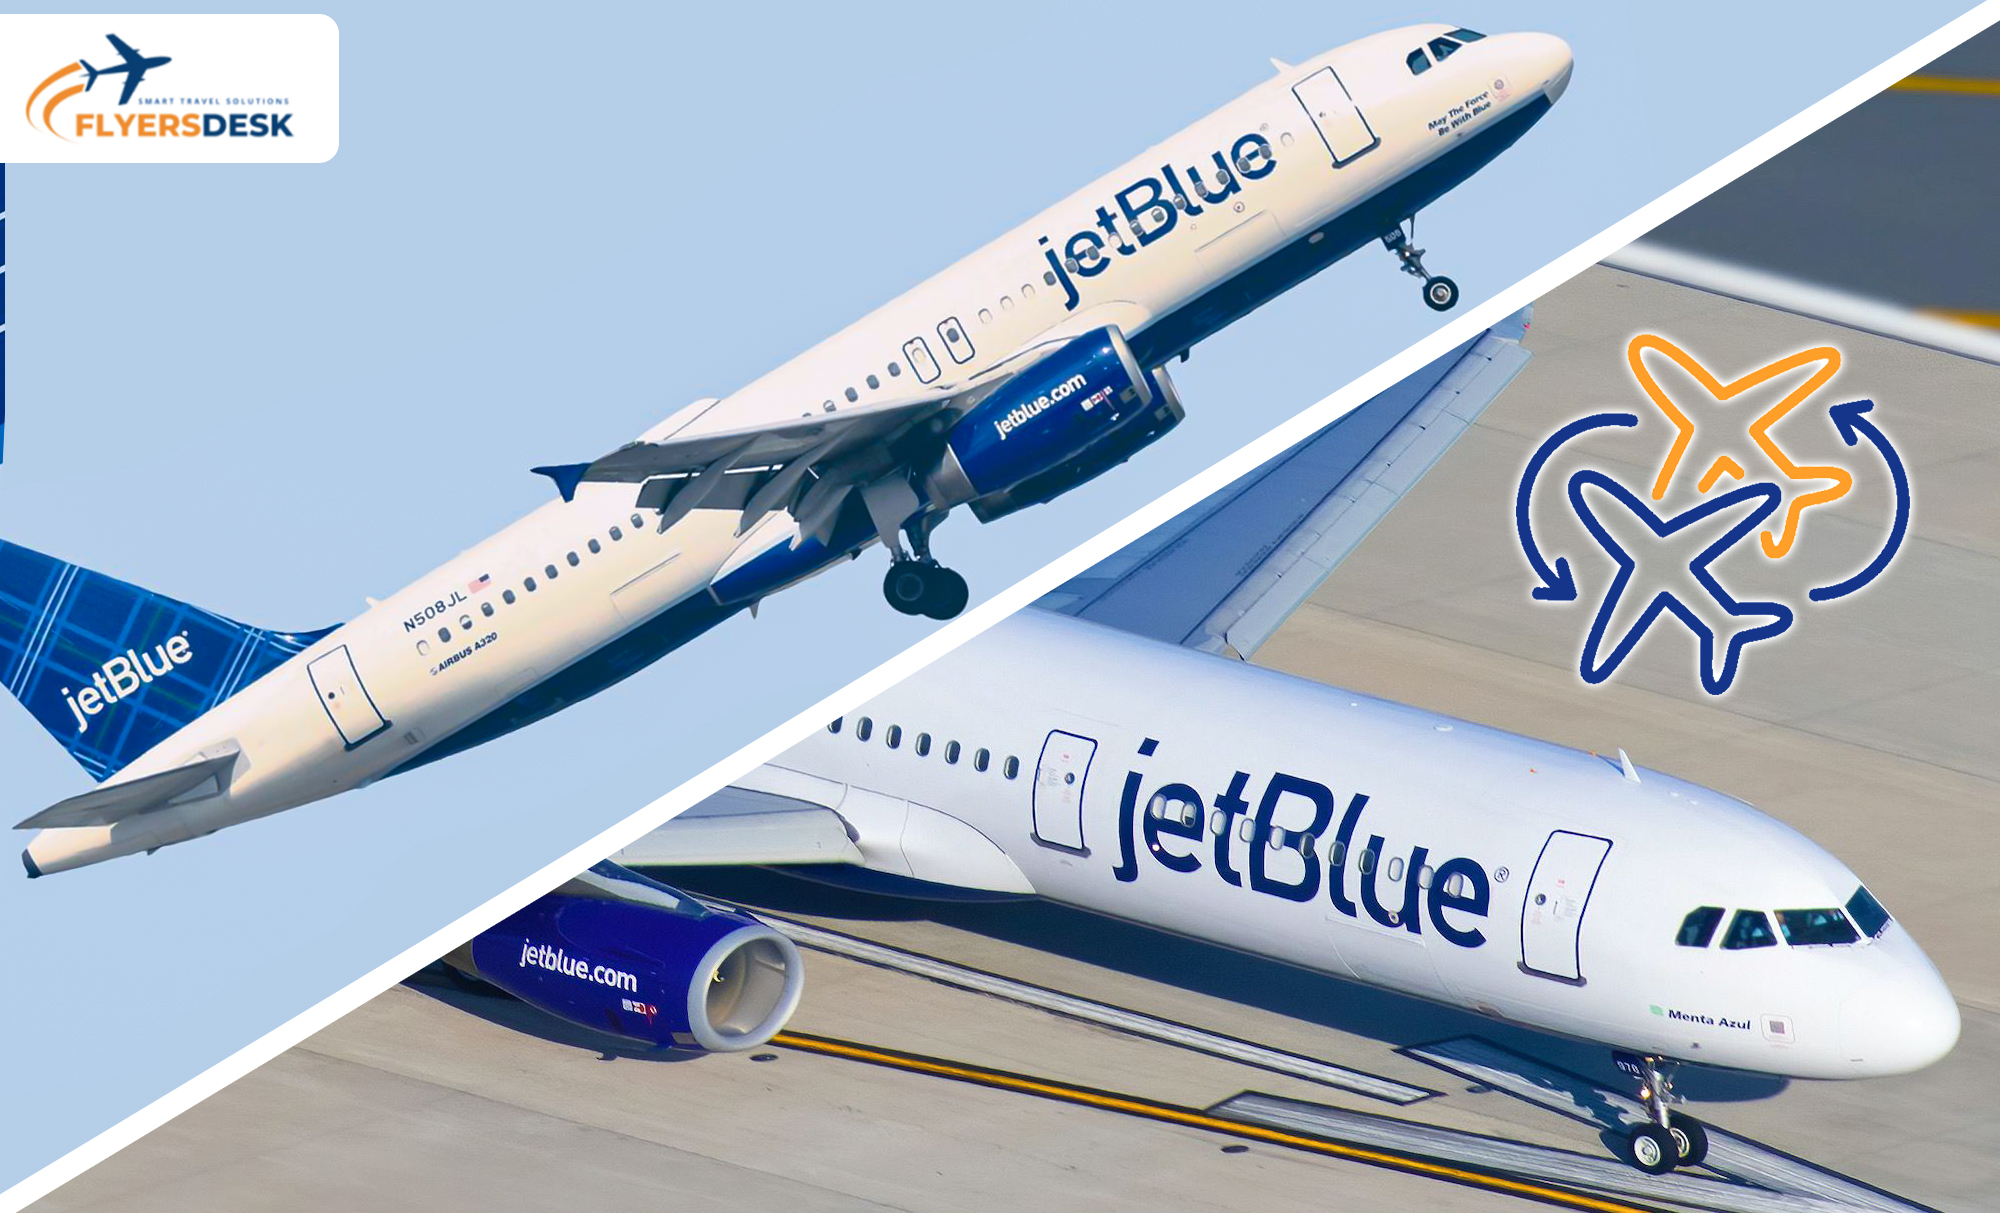 JetBlue Change flight policy